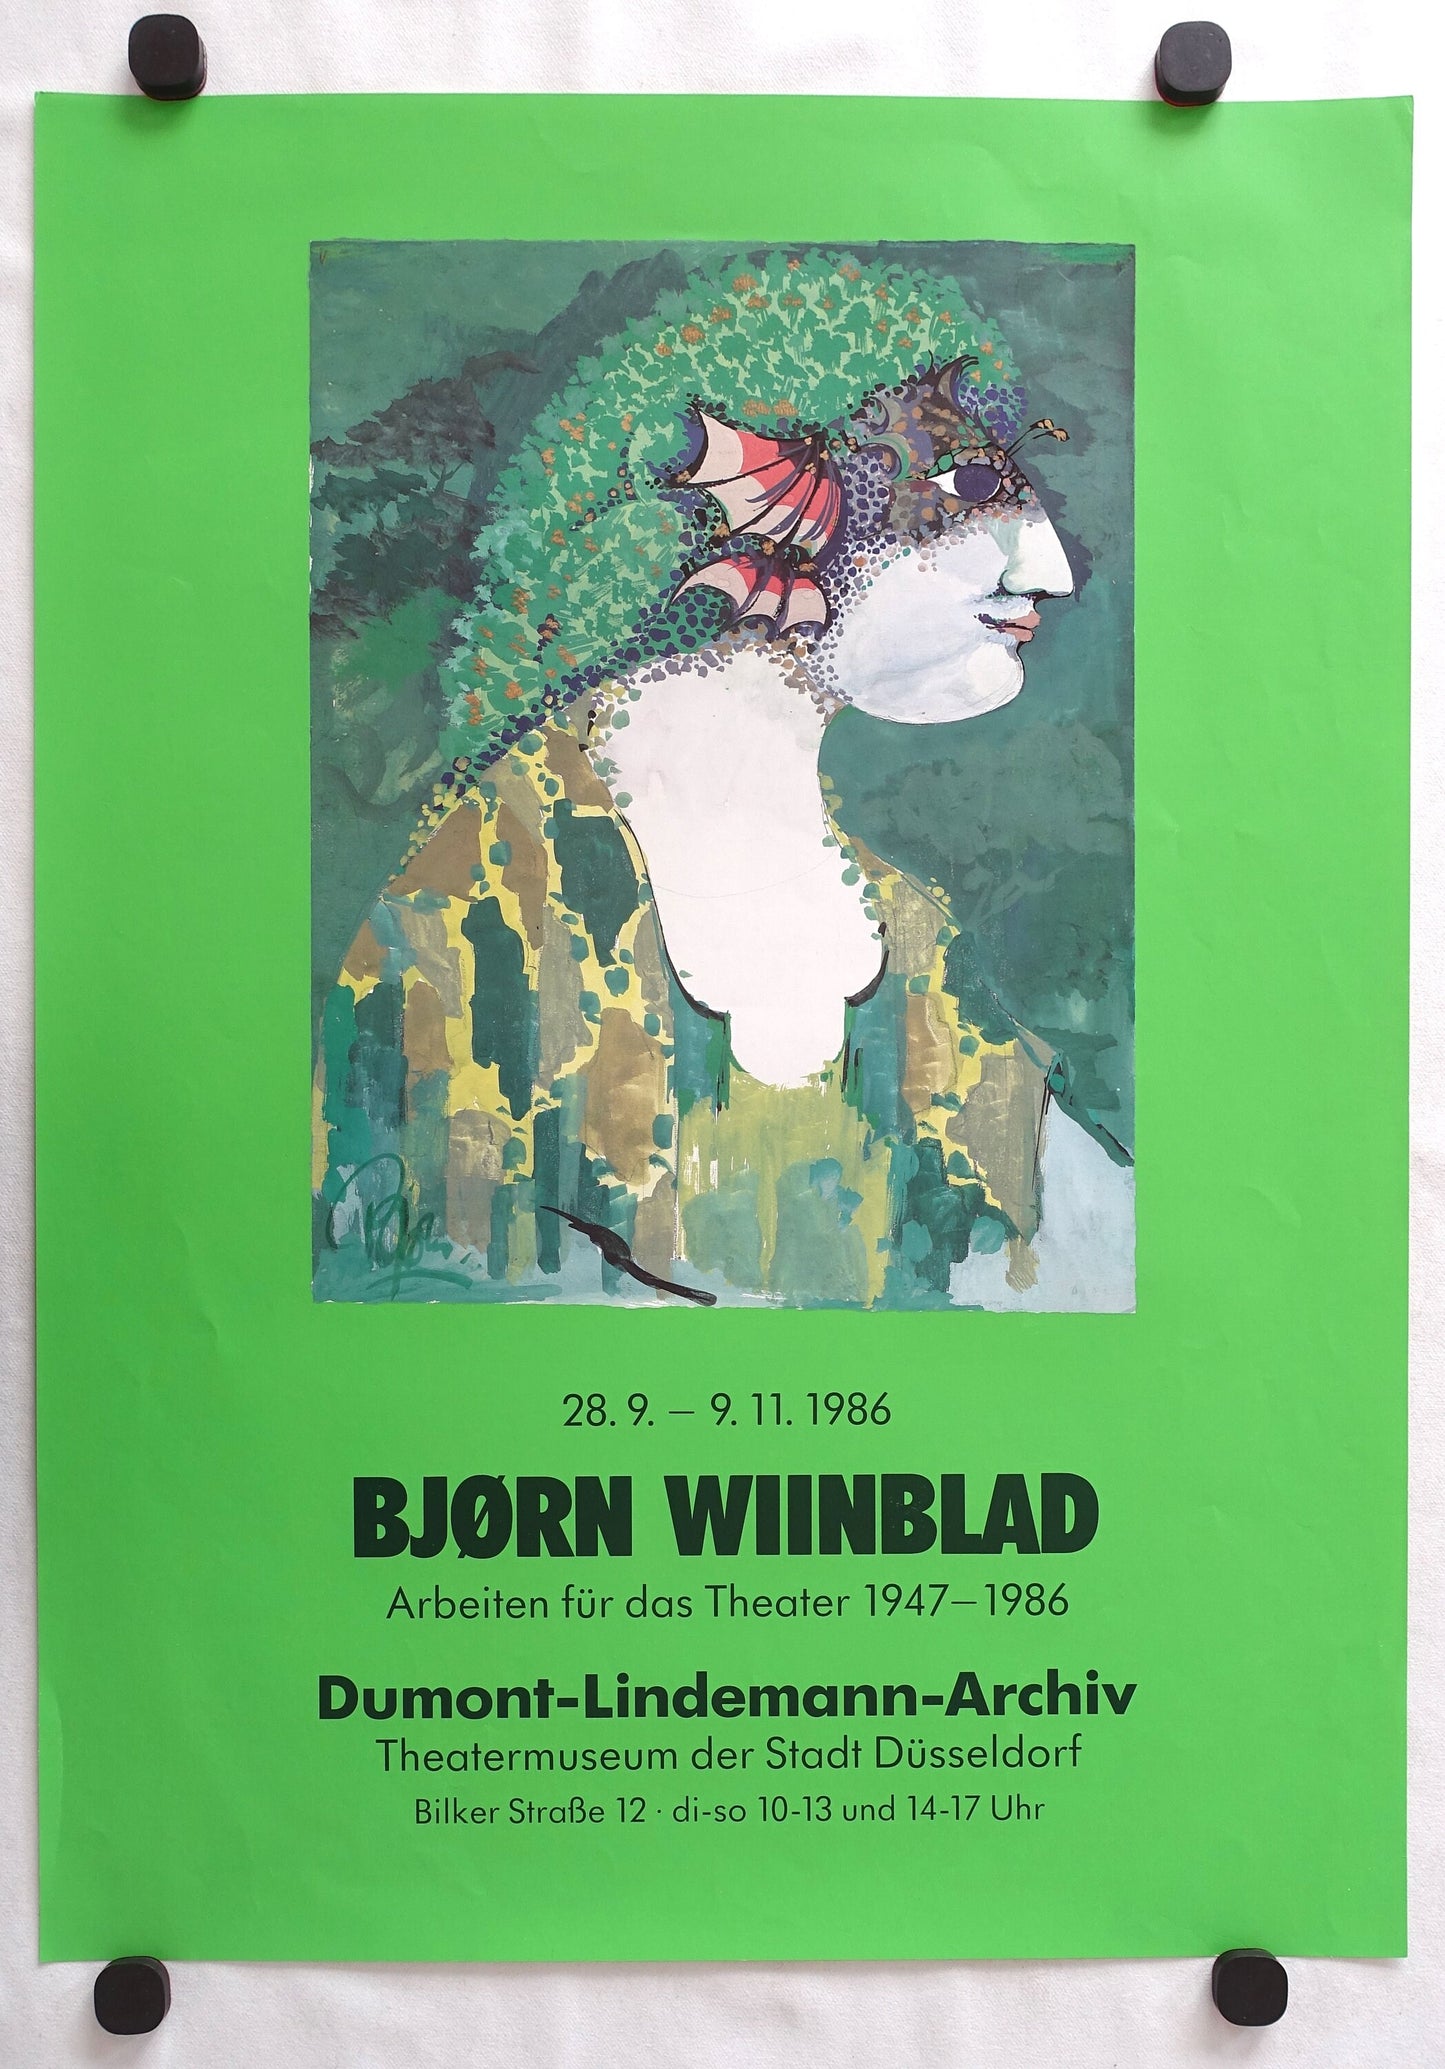 1986 Wiinblad's A Midsummer Night’s Dream Oberon (text version) - Original Vintage Poster